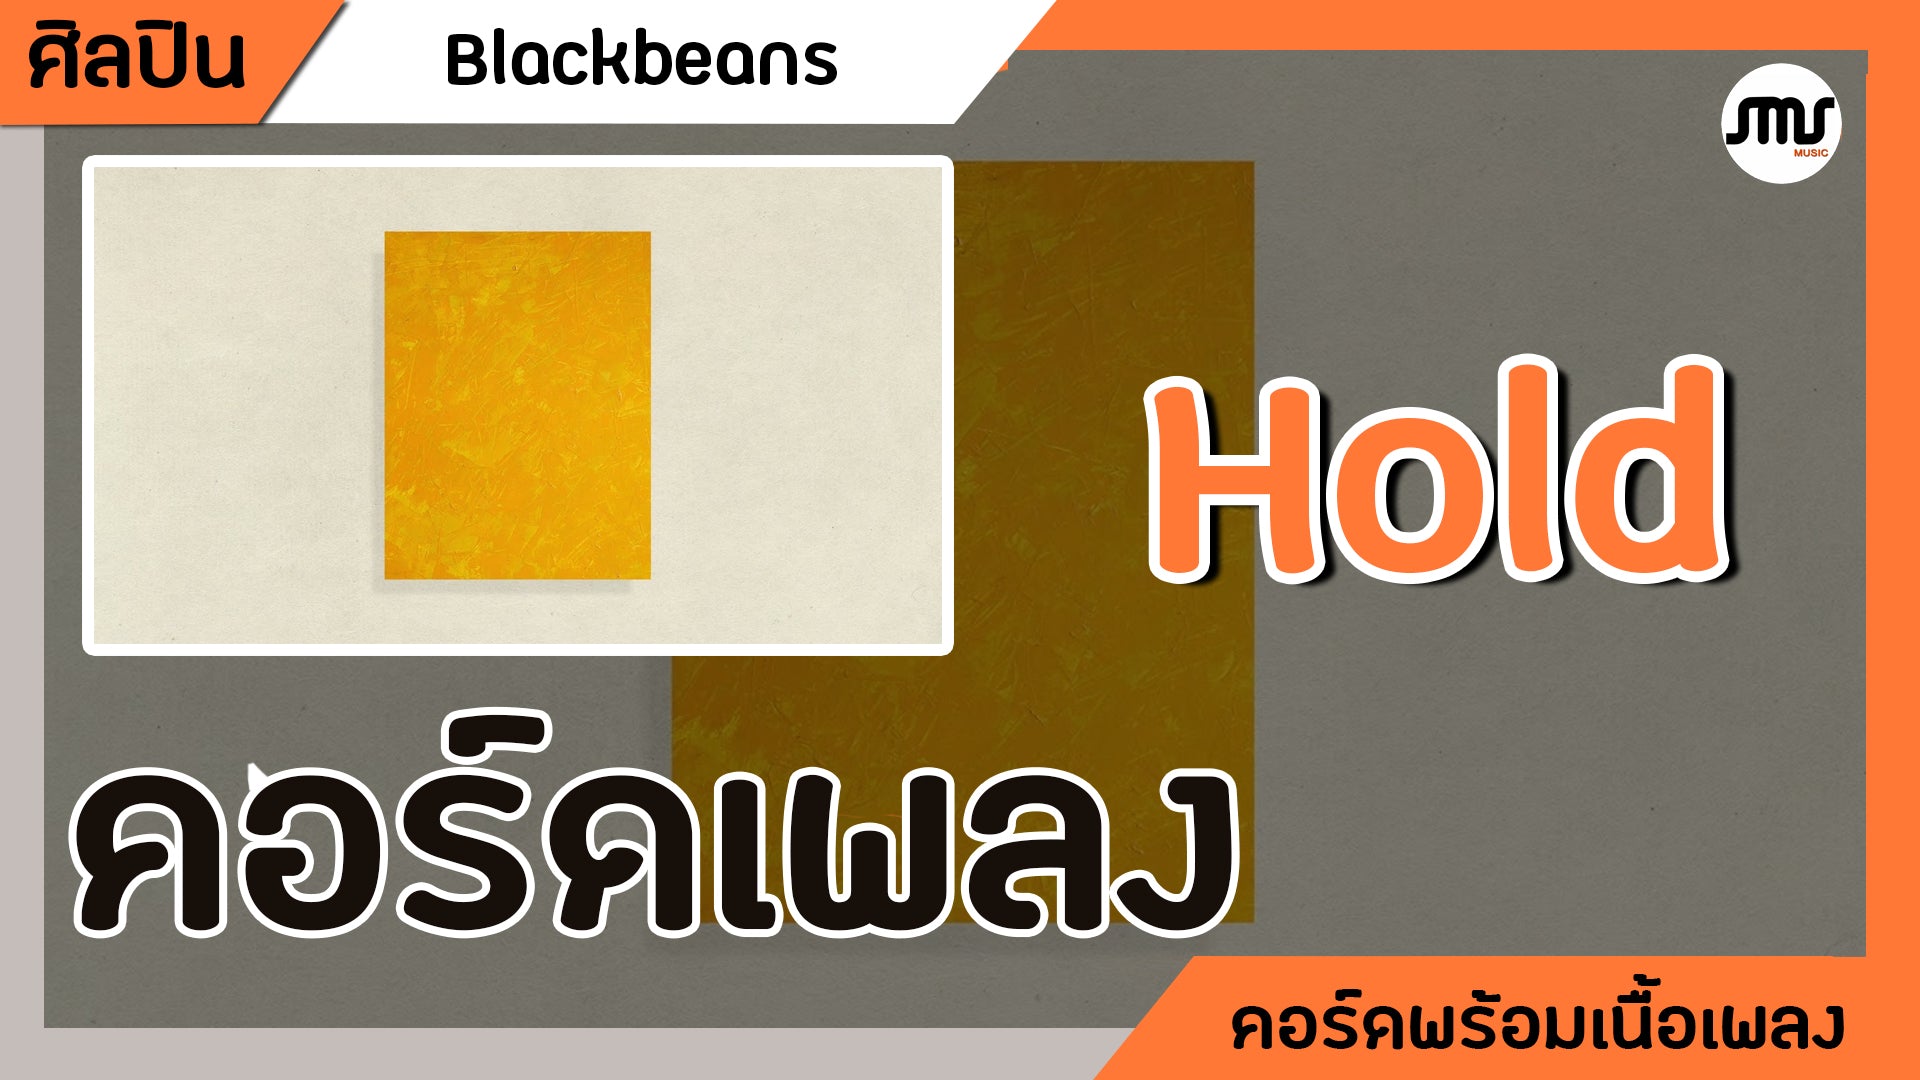 Hold - Blackbeans : คอร์ดเพลง